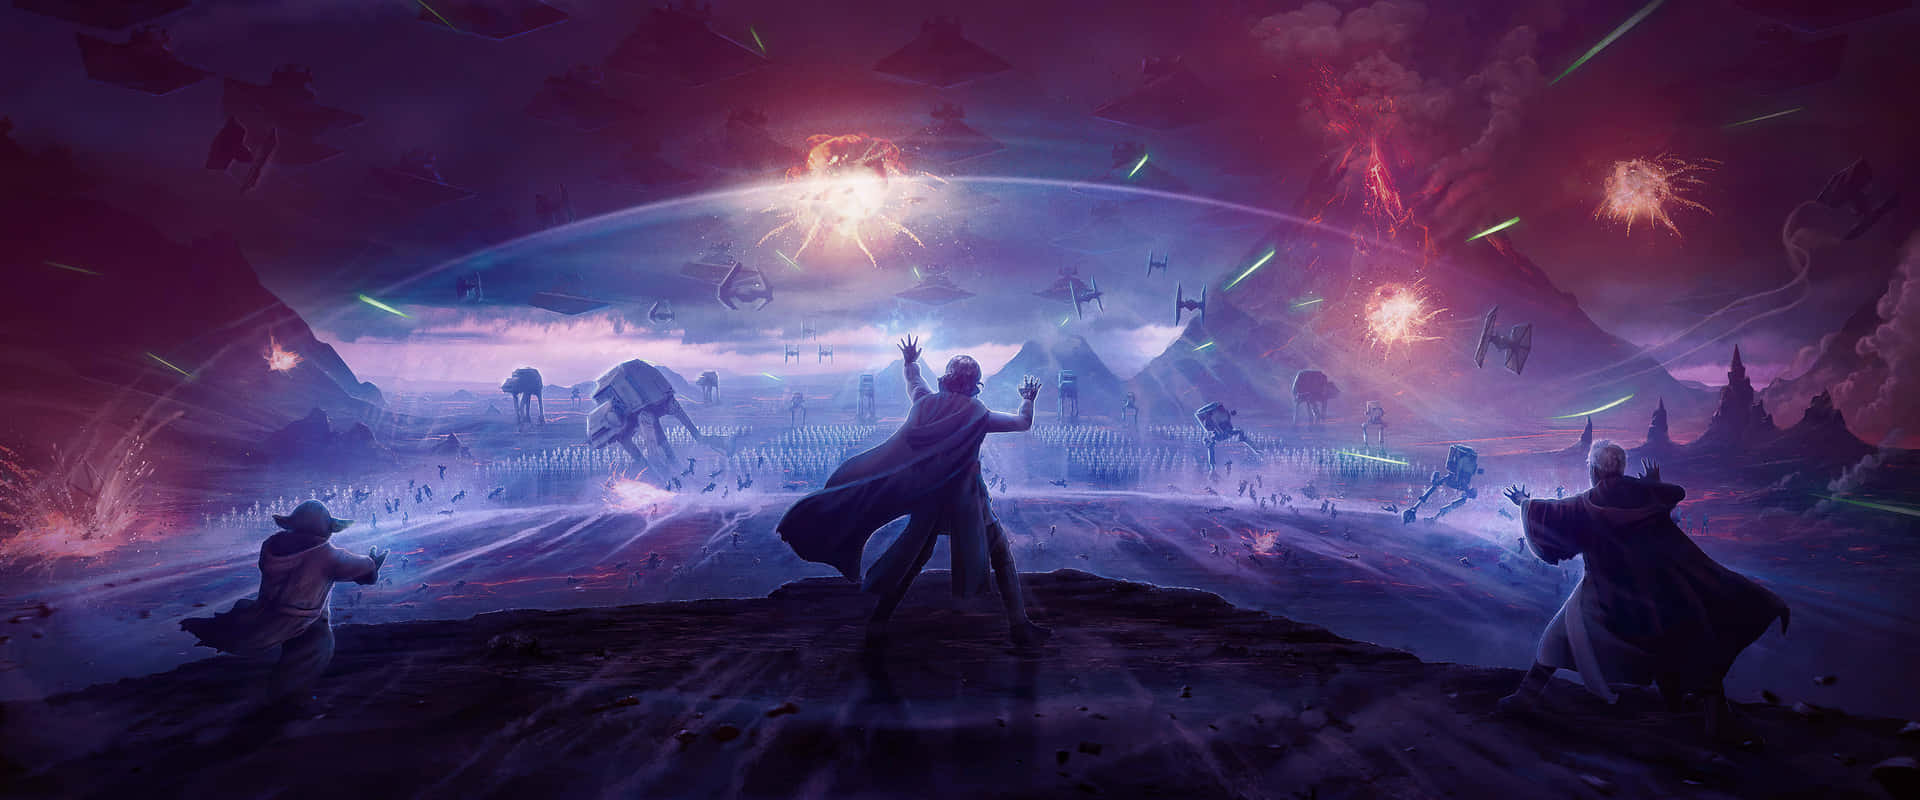 Starwars Galactic Empire War Bakgrundsbild.